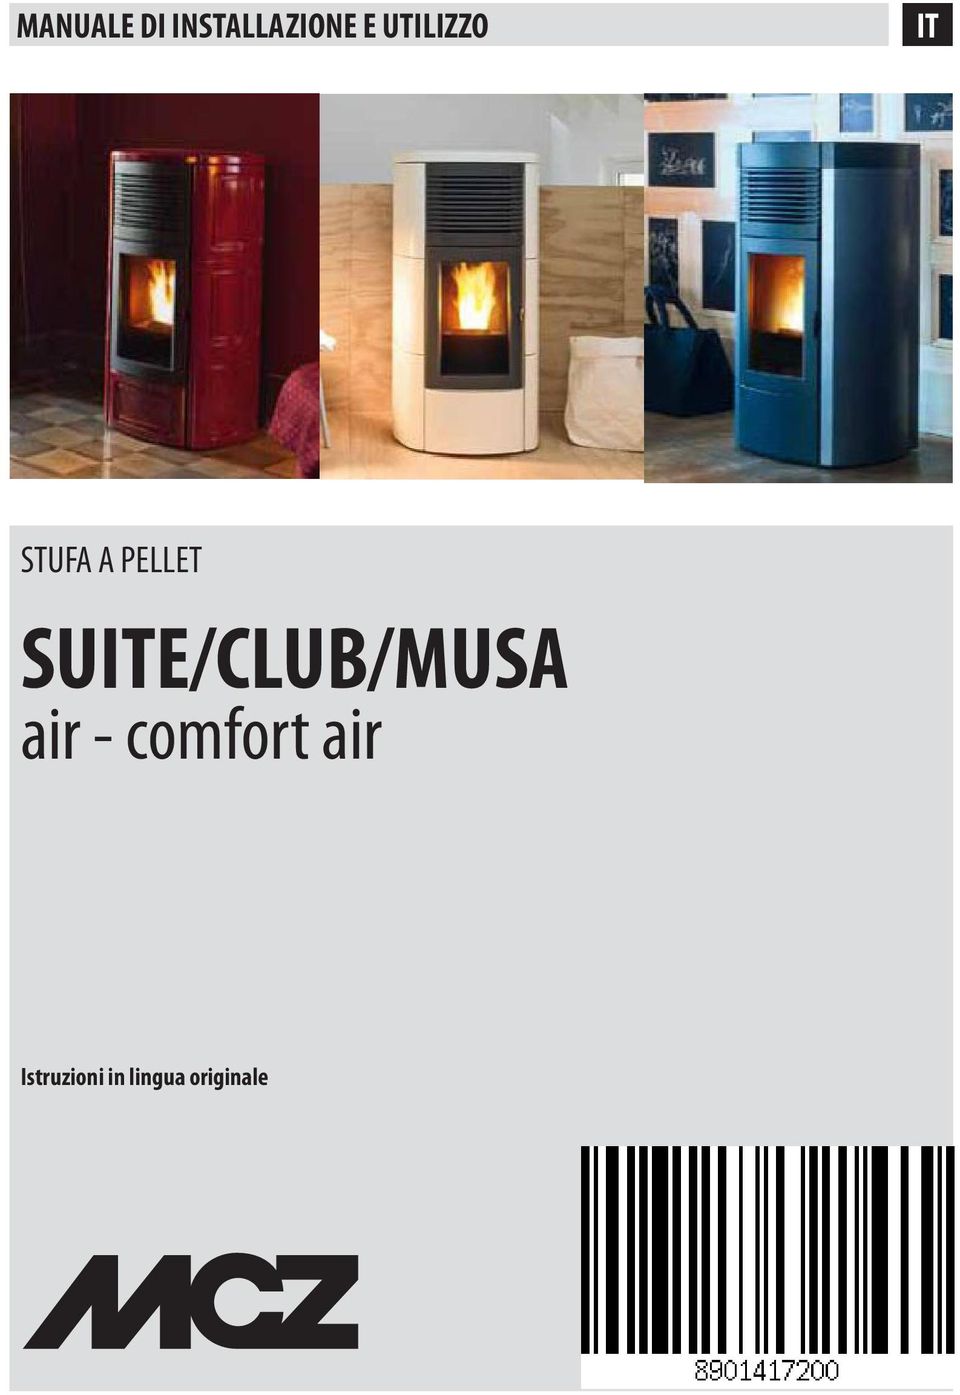 SUITE/CLUB/MUSA air - comfort